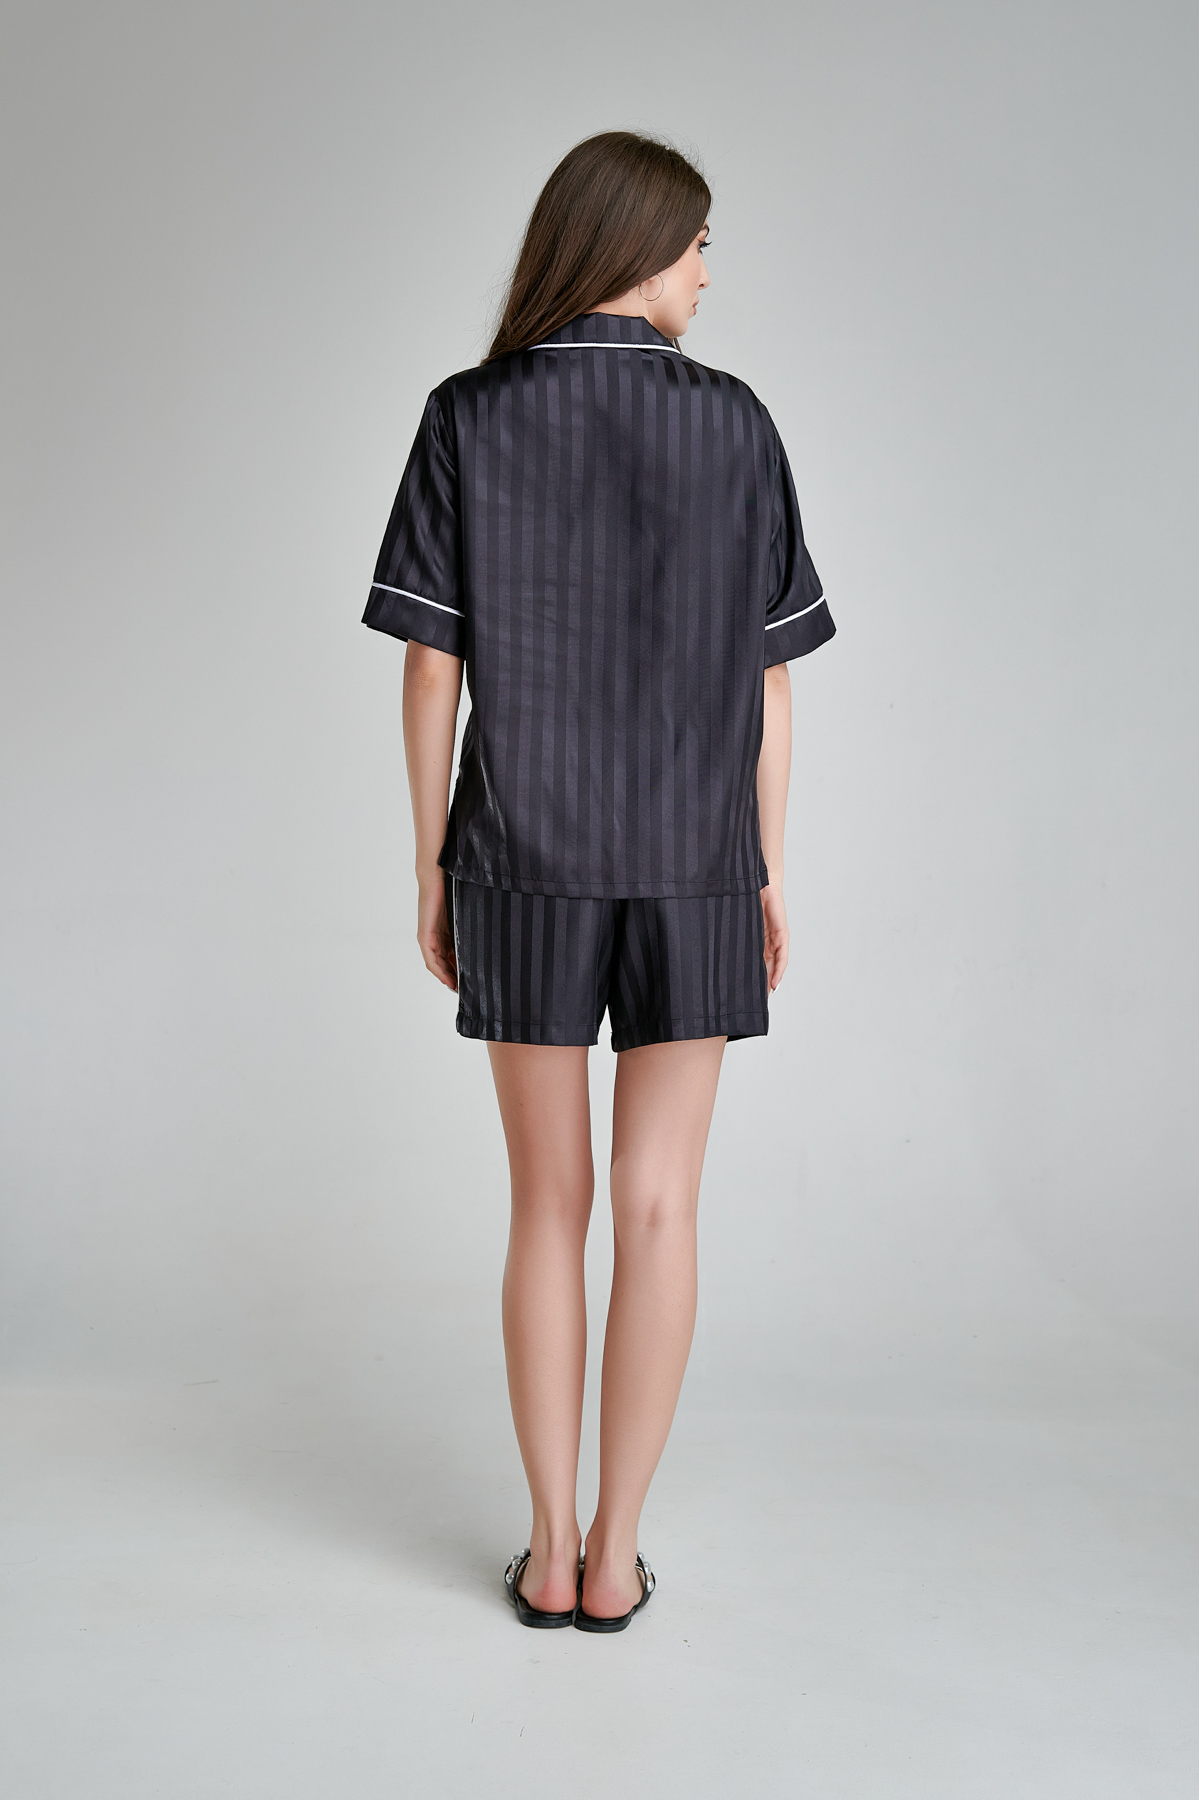 SURY black satin viscose shorts. Natural fabrics, original design, handmade embroidery